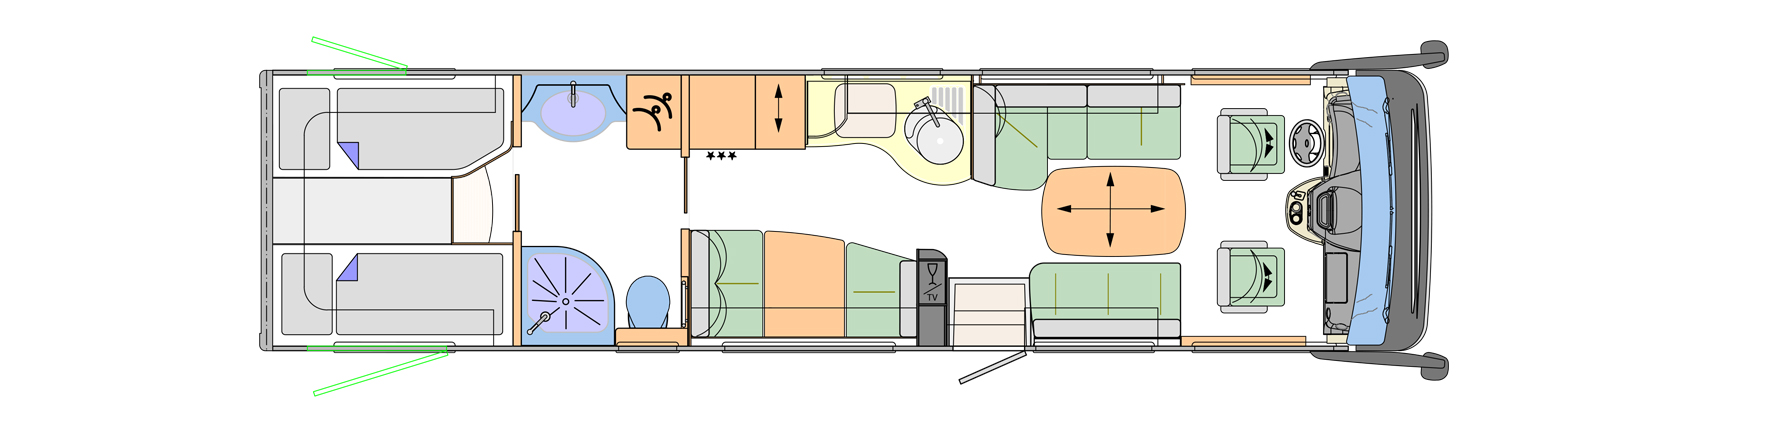 2019 Concorde Liner Plus 990L A-Class Motorhome Floorplan Layout